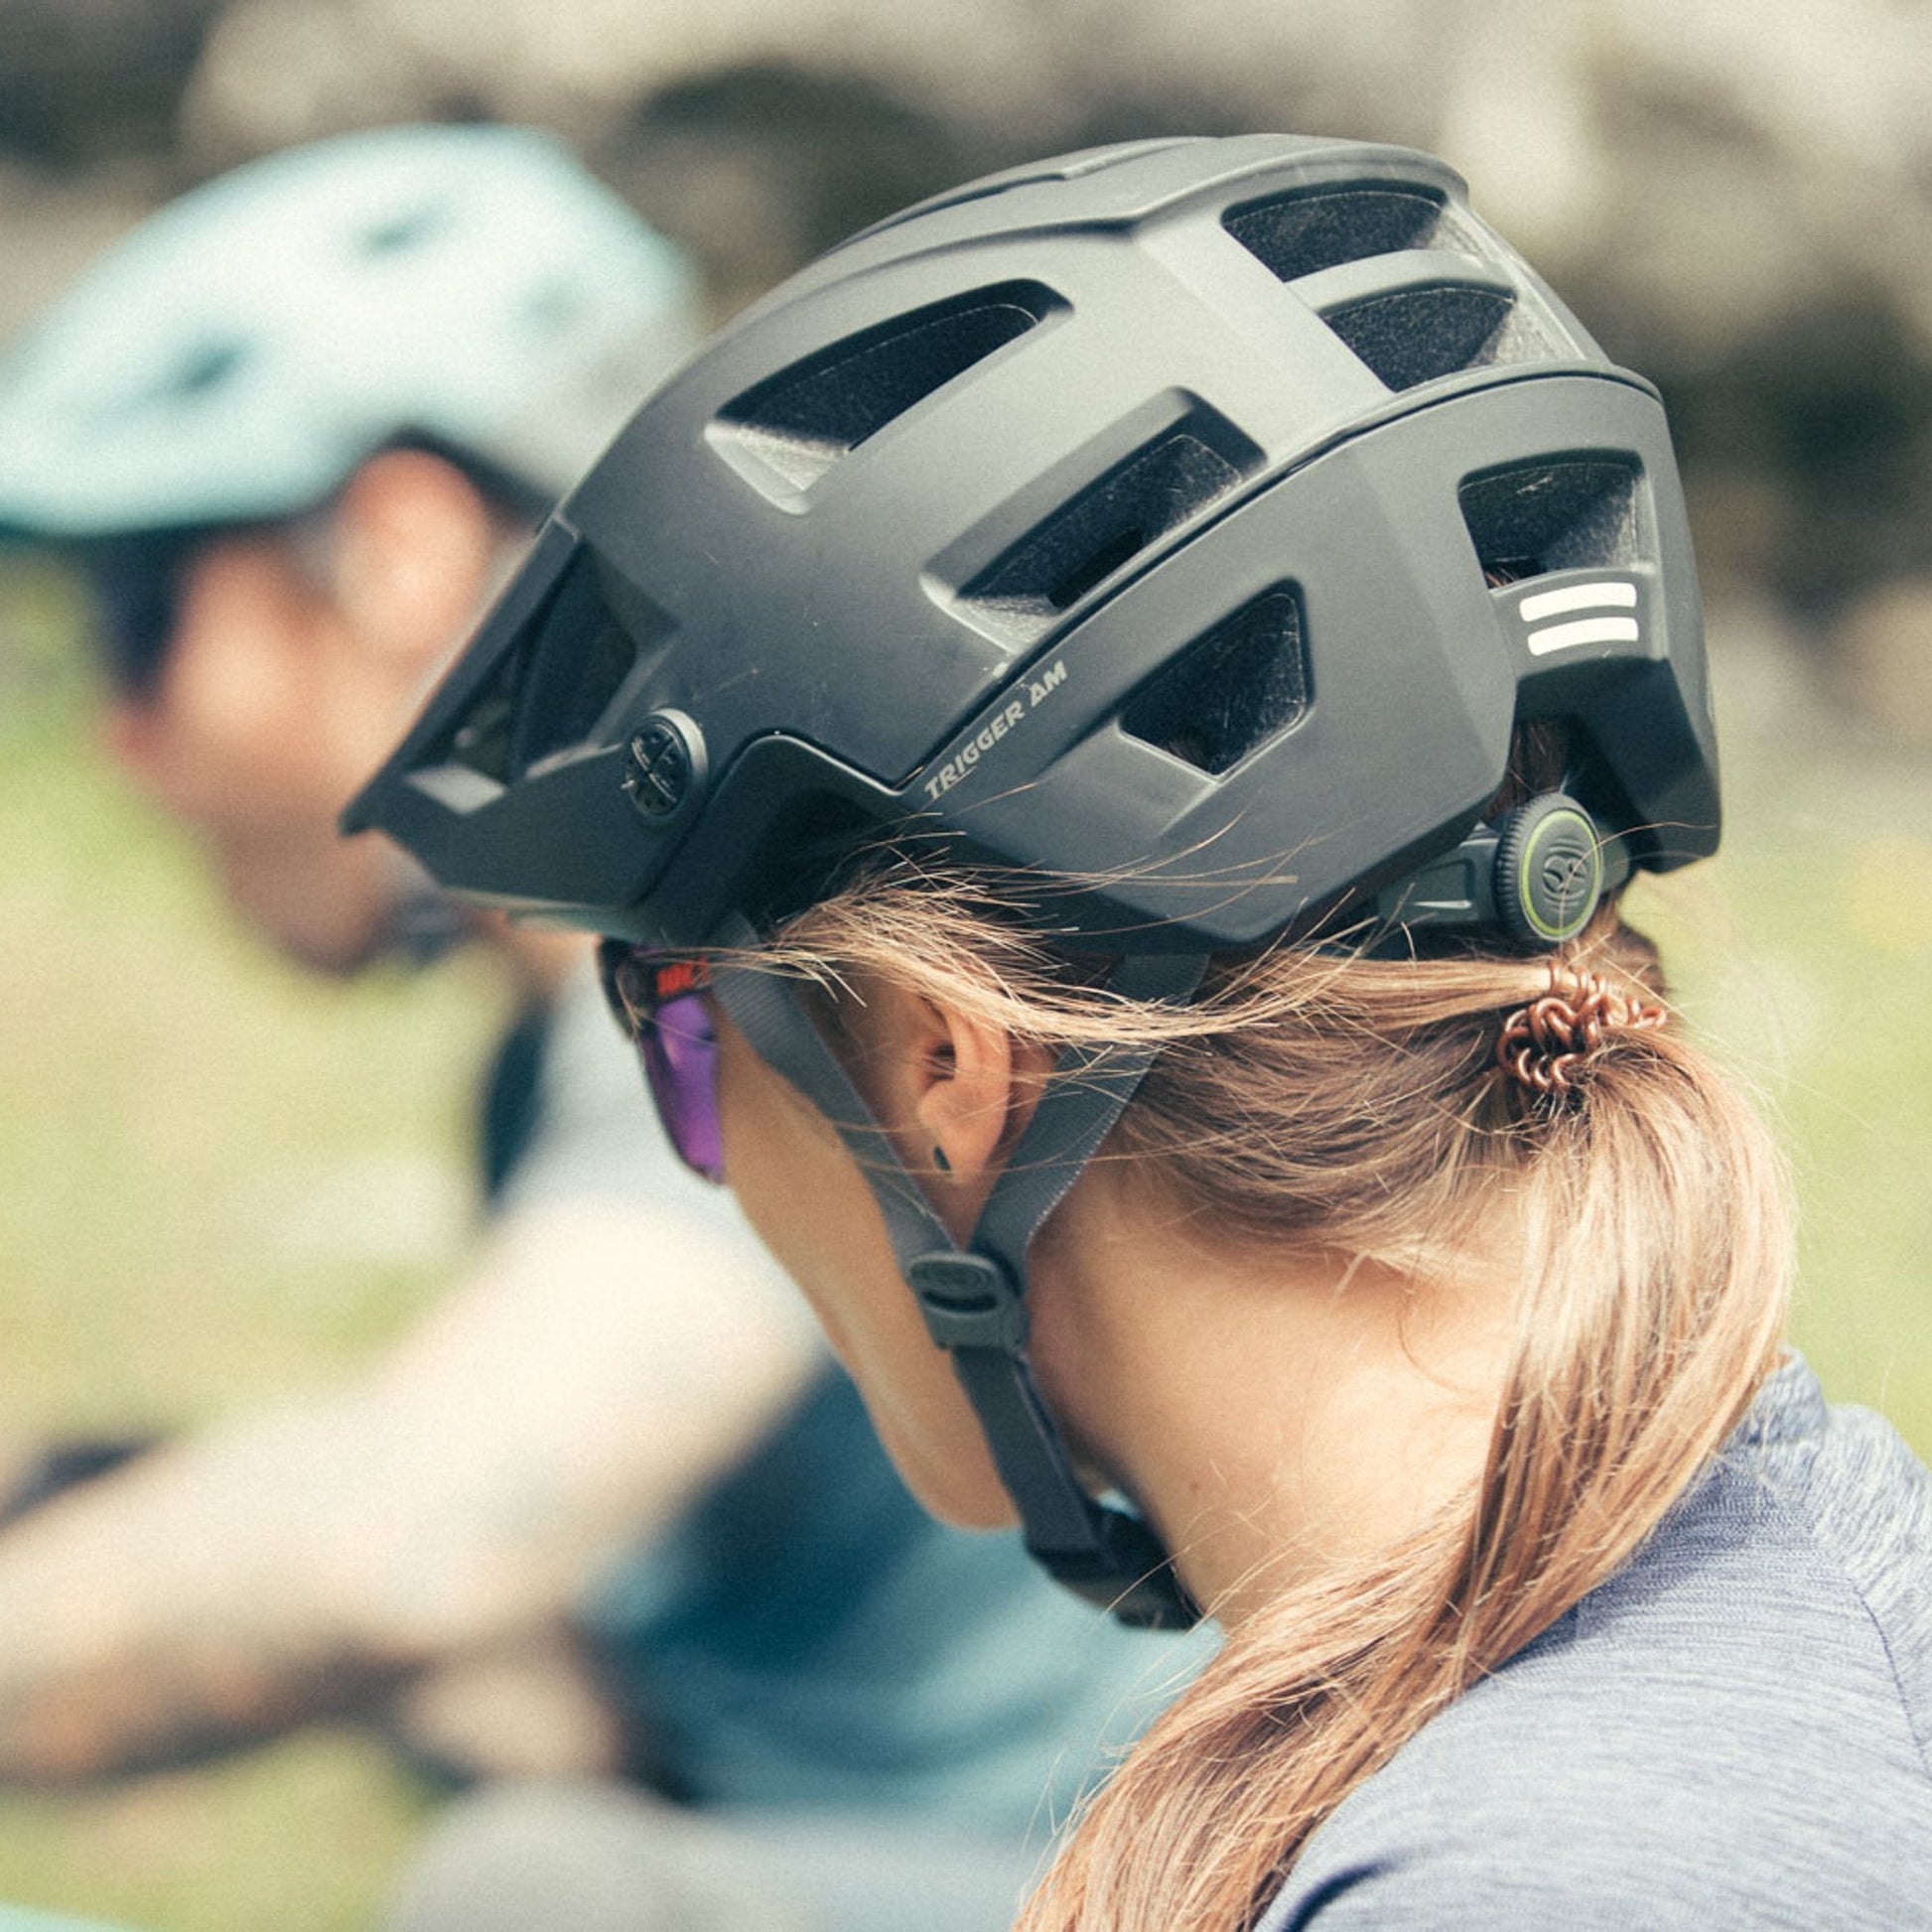 iXS IXS Trigger AM Helmet - Helmets - Bicycle Warehouse